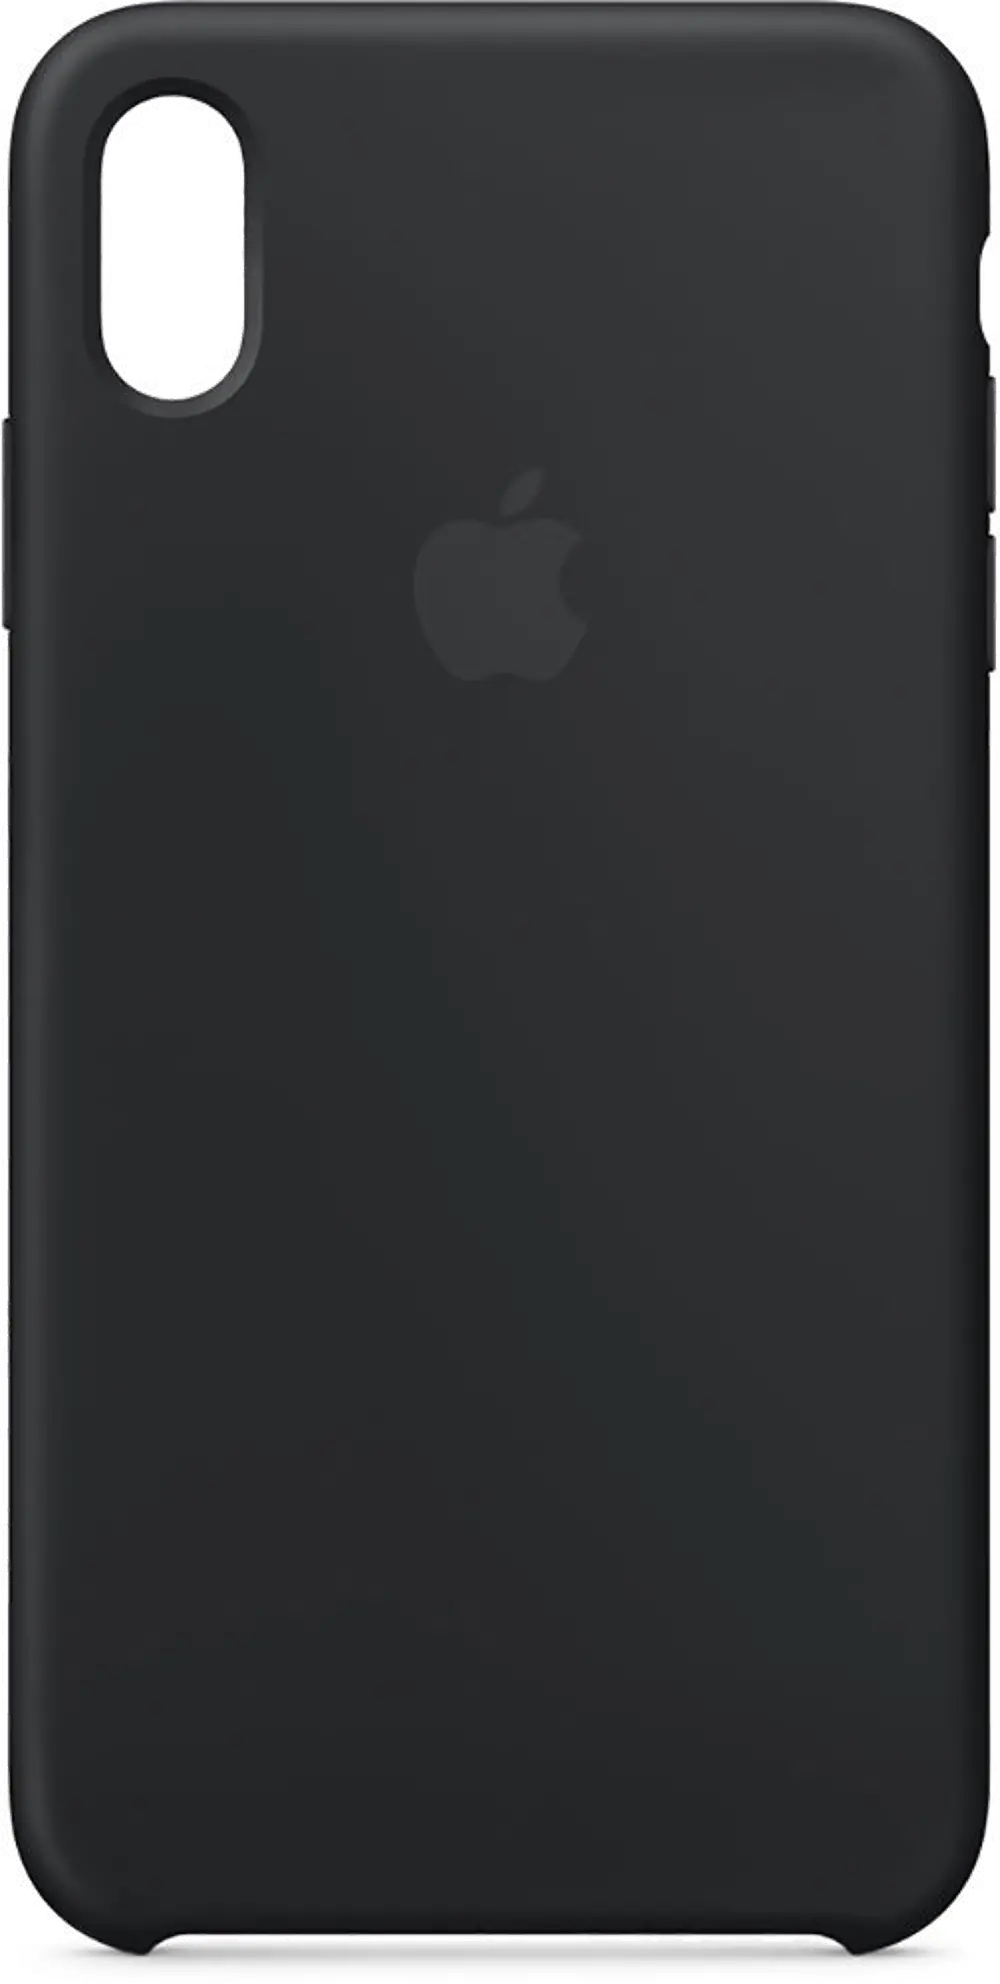 MRWE2ZM/A,XSM,CASE Apple iPhone XS Max Silicone Case - Black-1